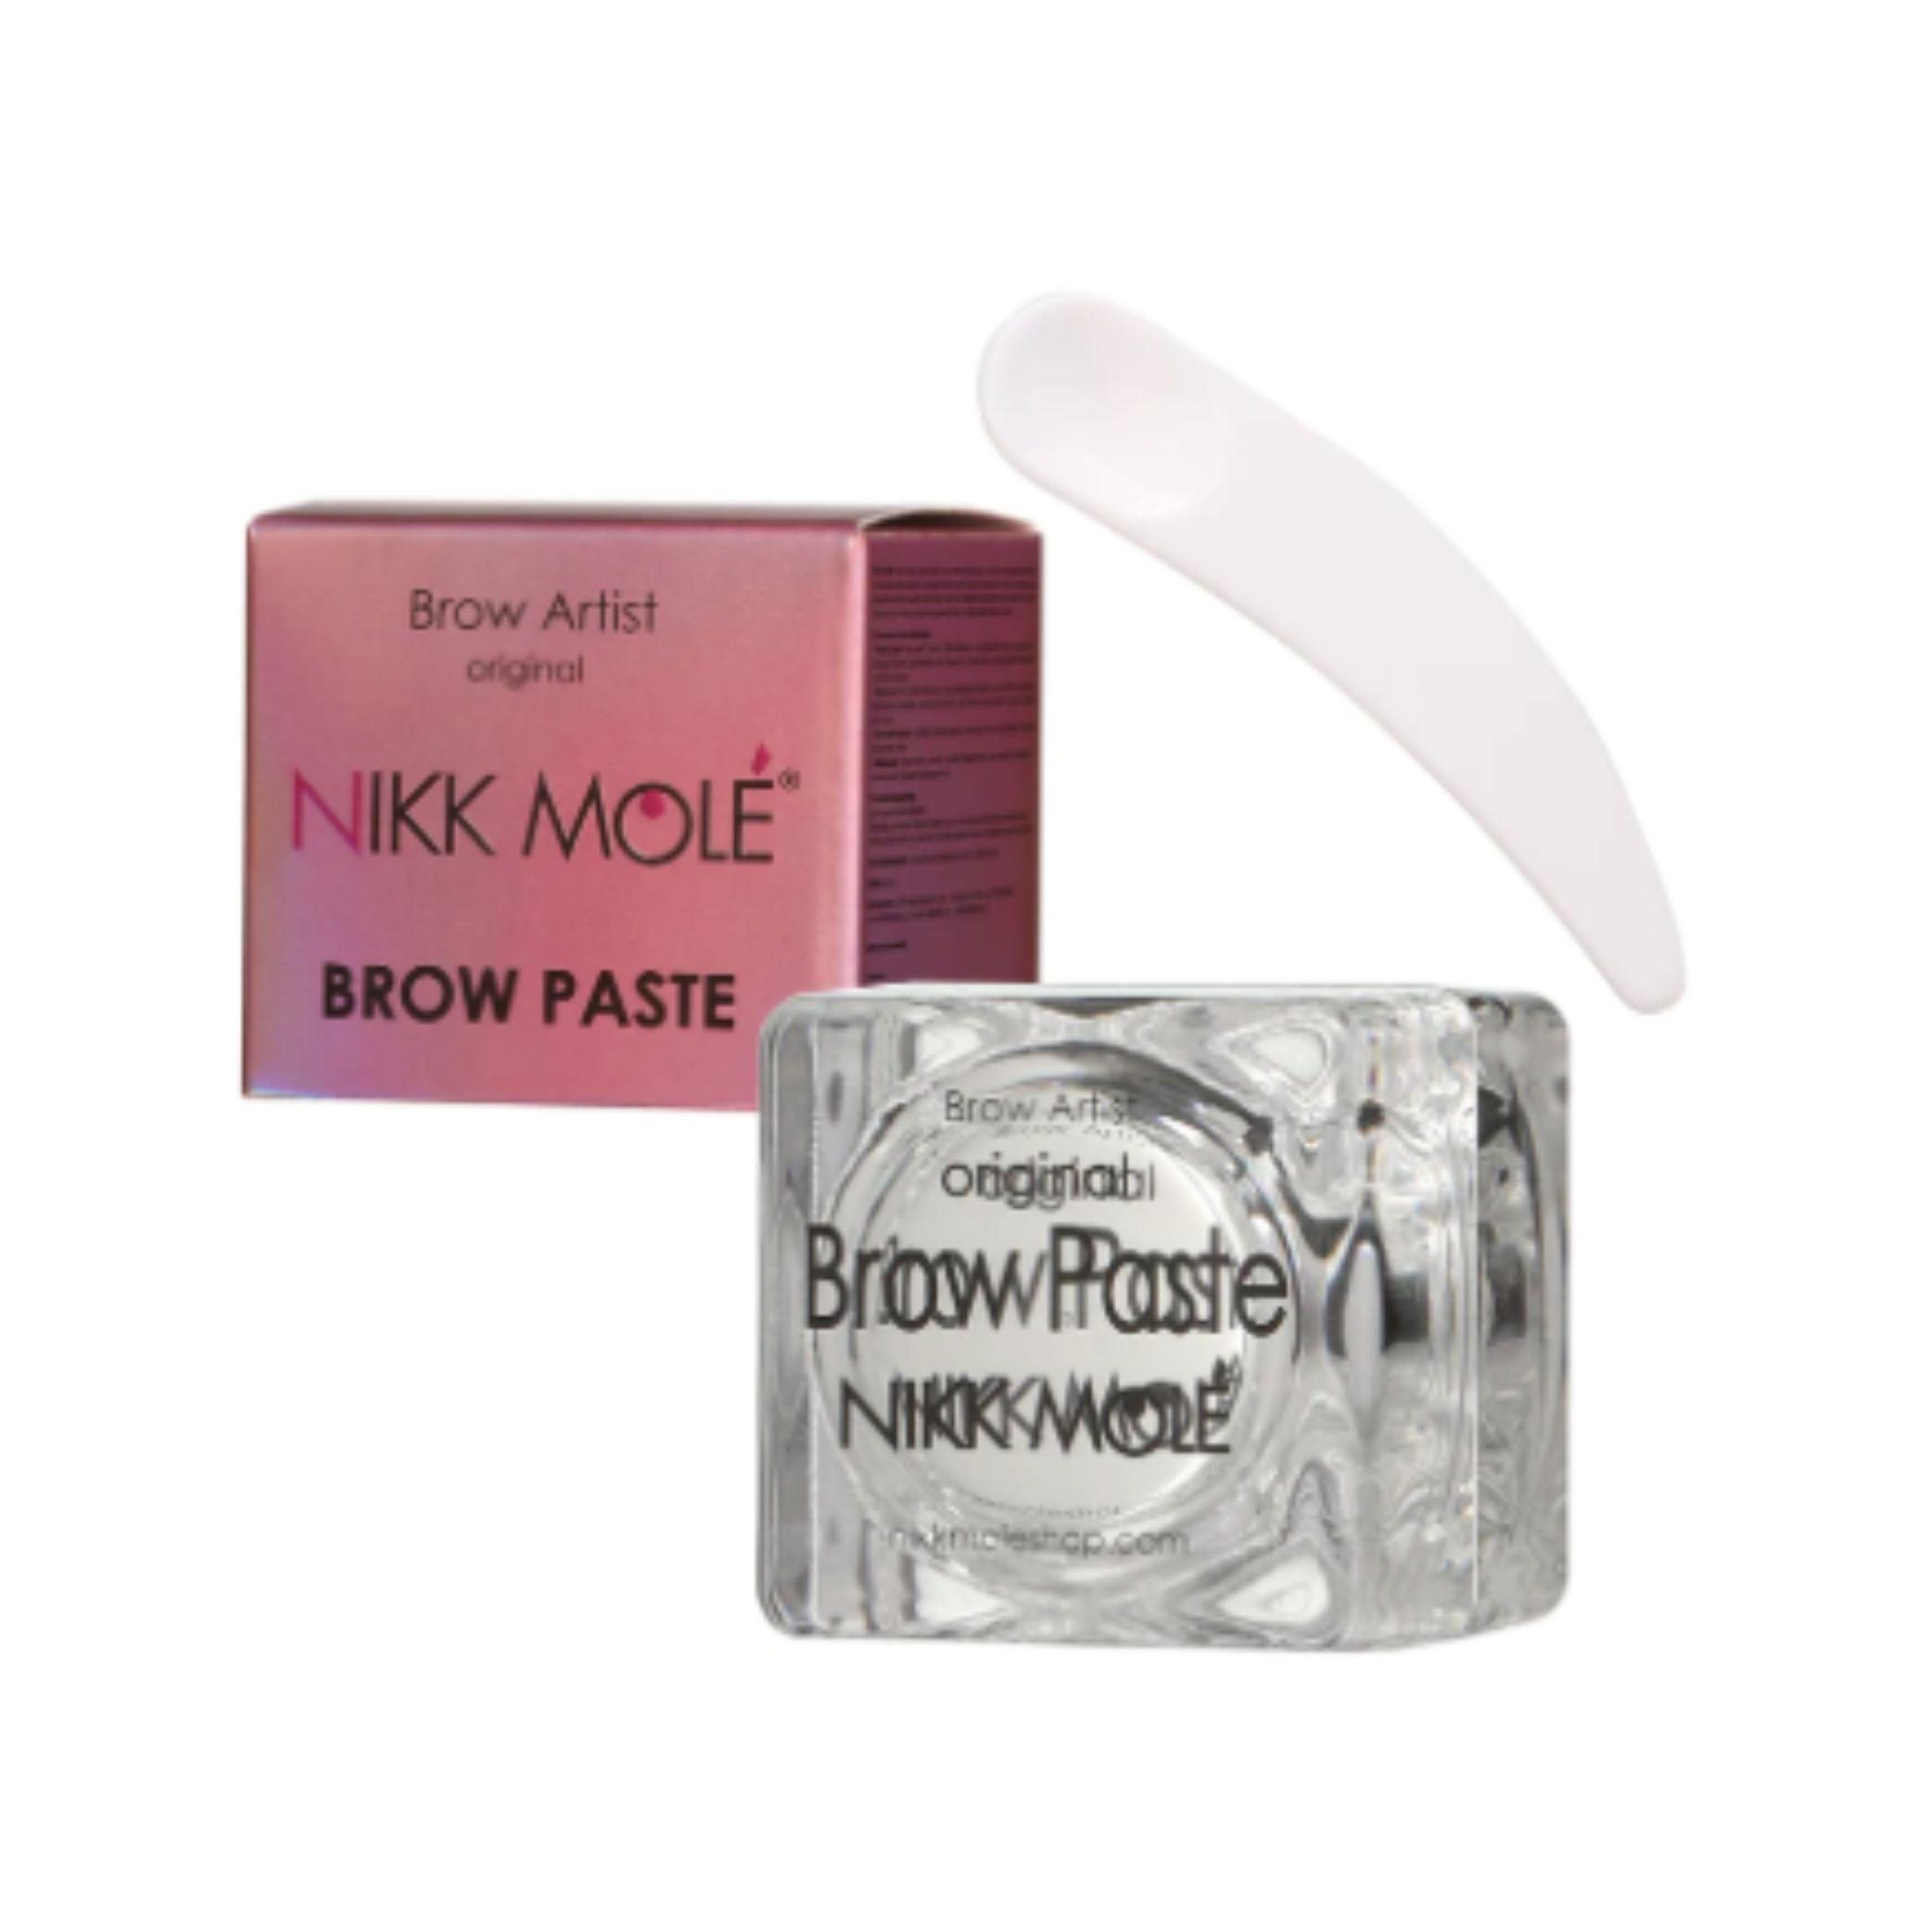 Nikk Mole Brow Paste - White - The Beauty House Shop